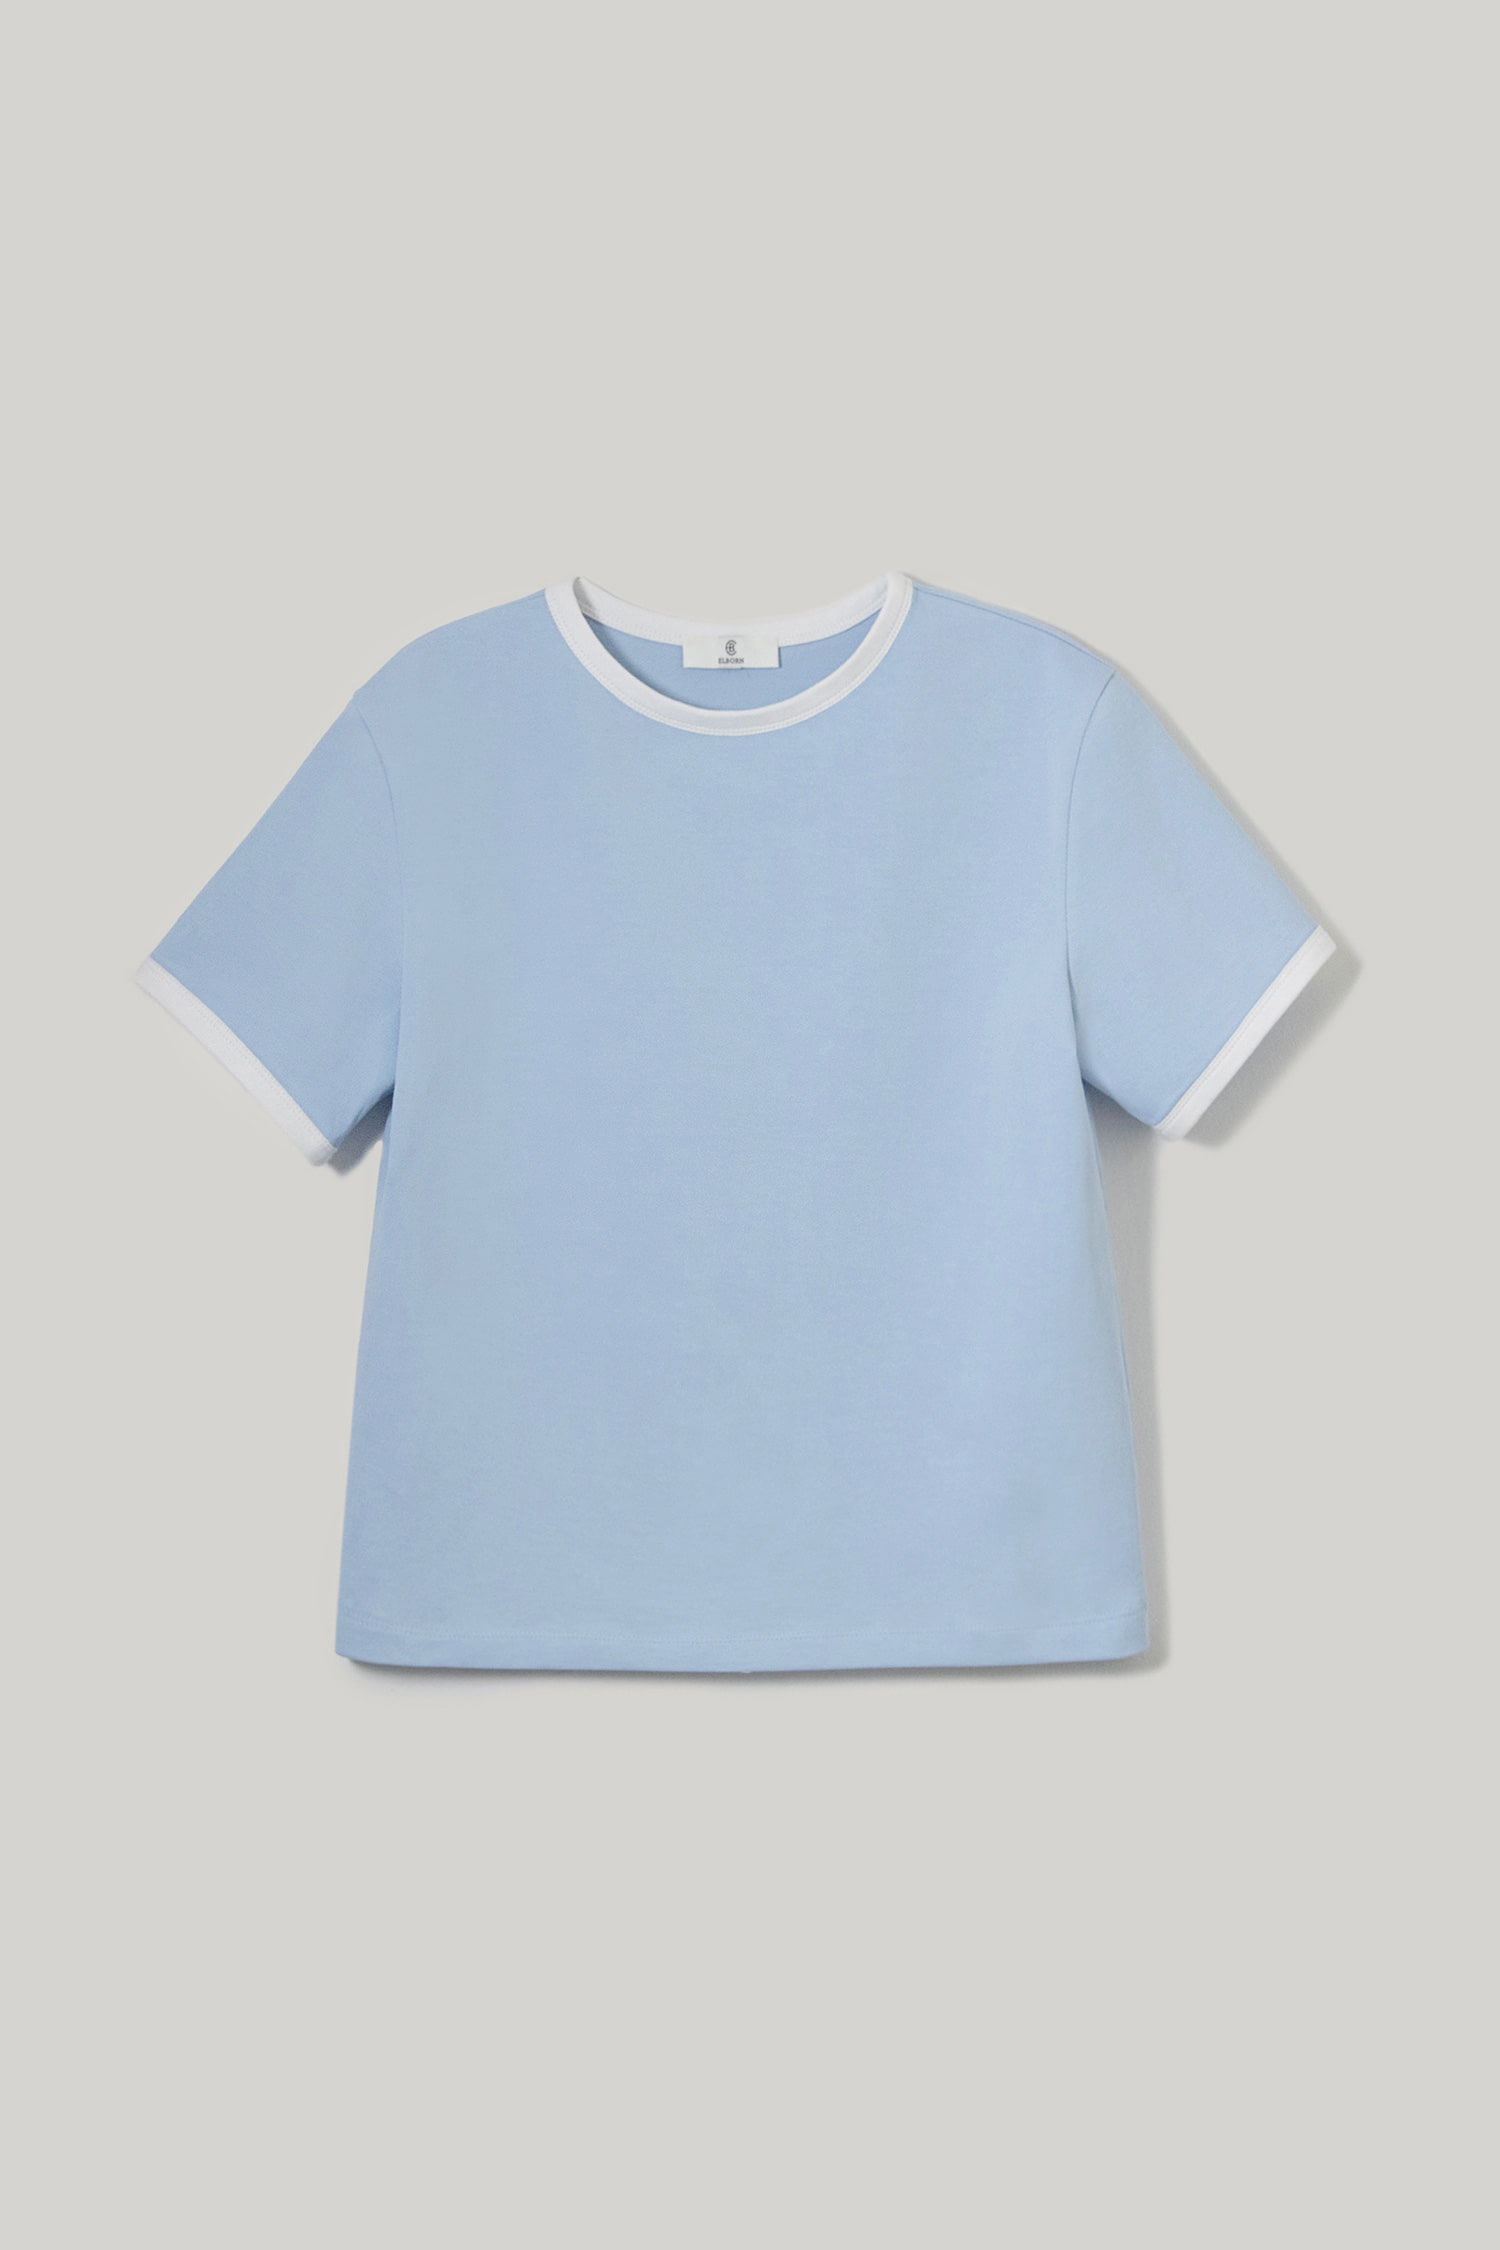 Momo Line T-shirt (3 colors)